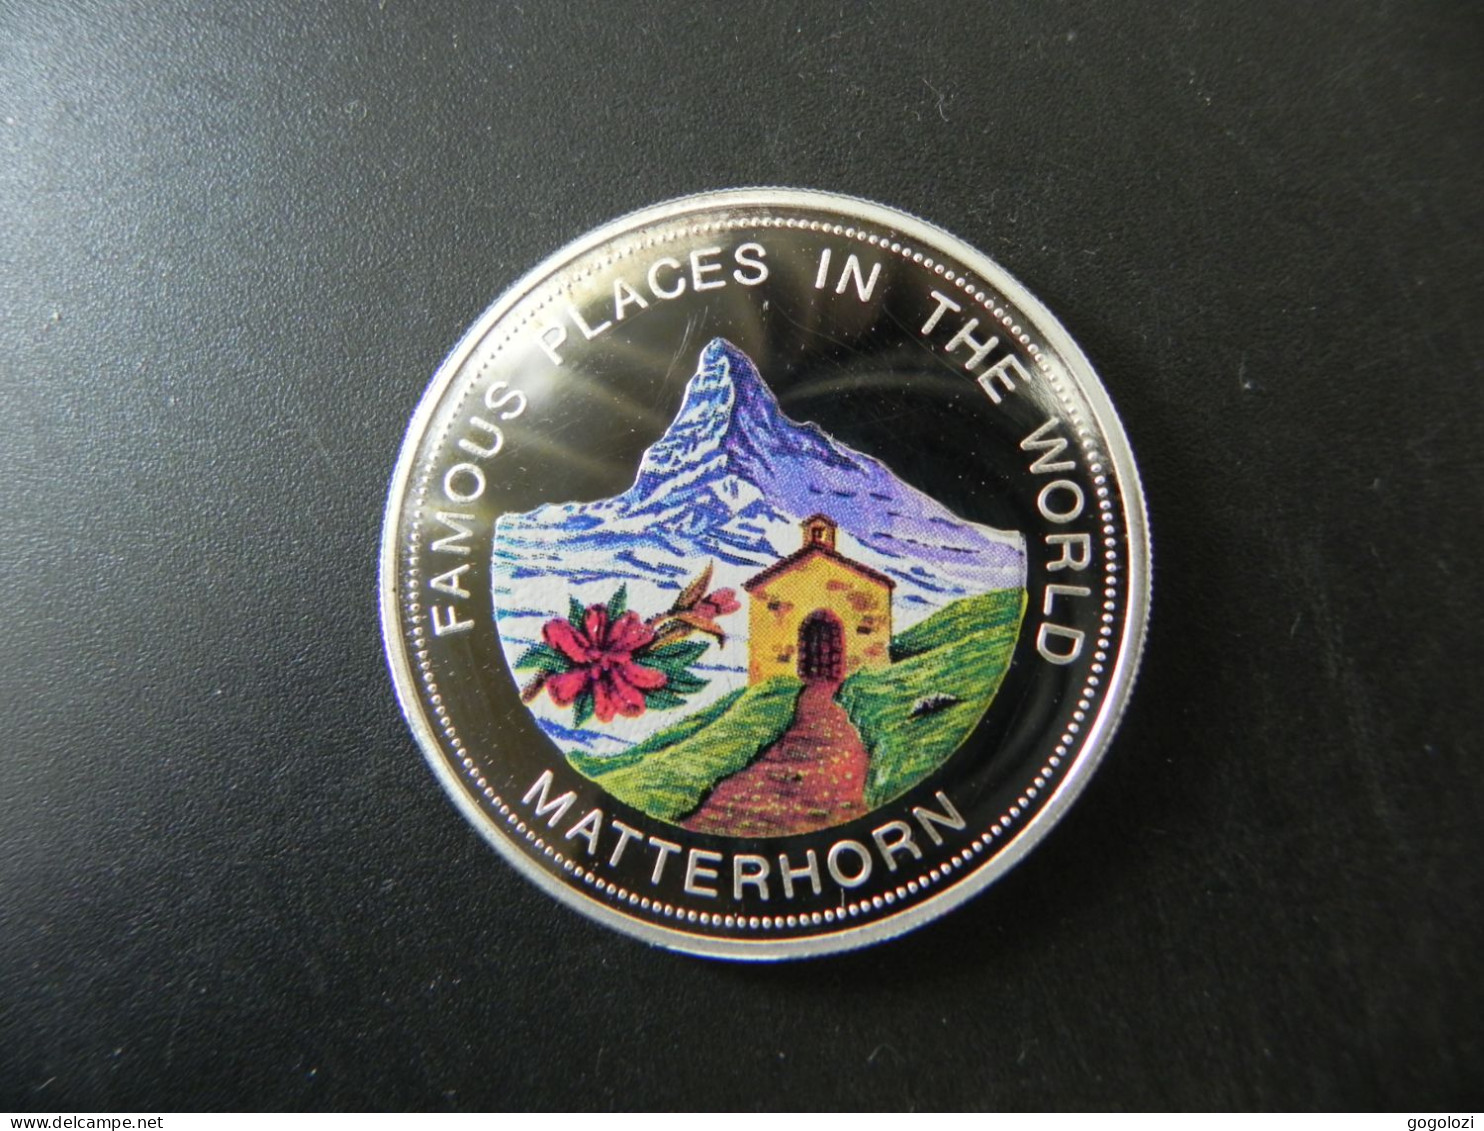 Uganda 2000 Shillings 1993 - Silver (0.999) 19.92 G - Famous Places In The World - Matterhorn - Uganda